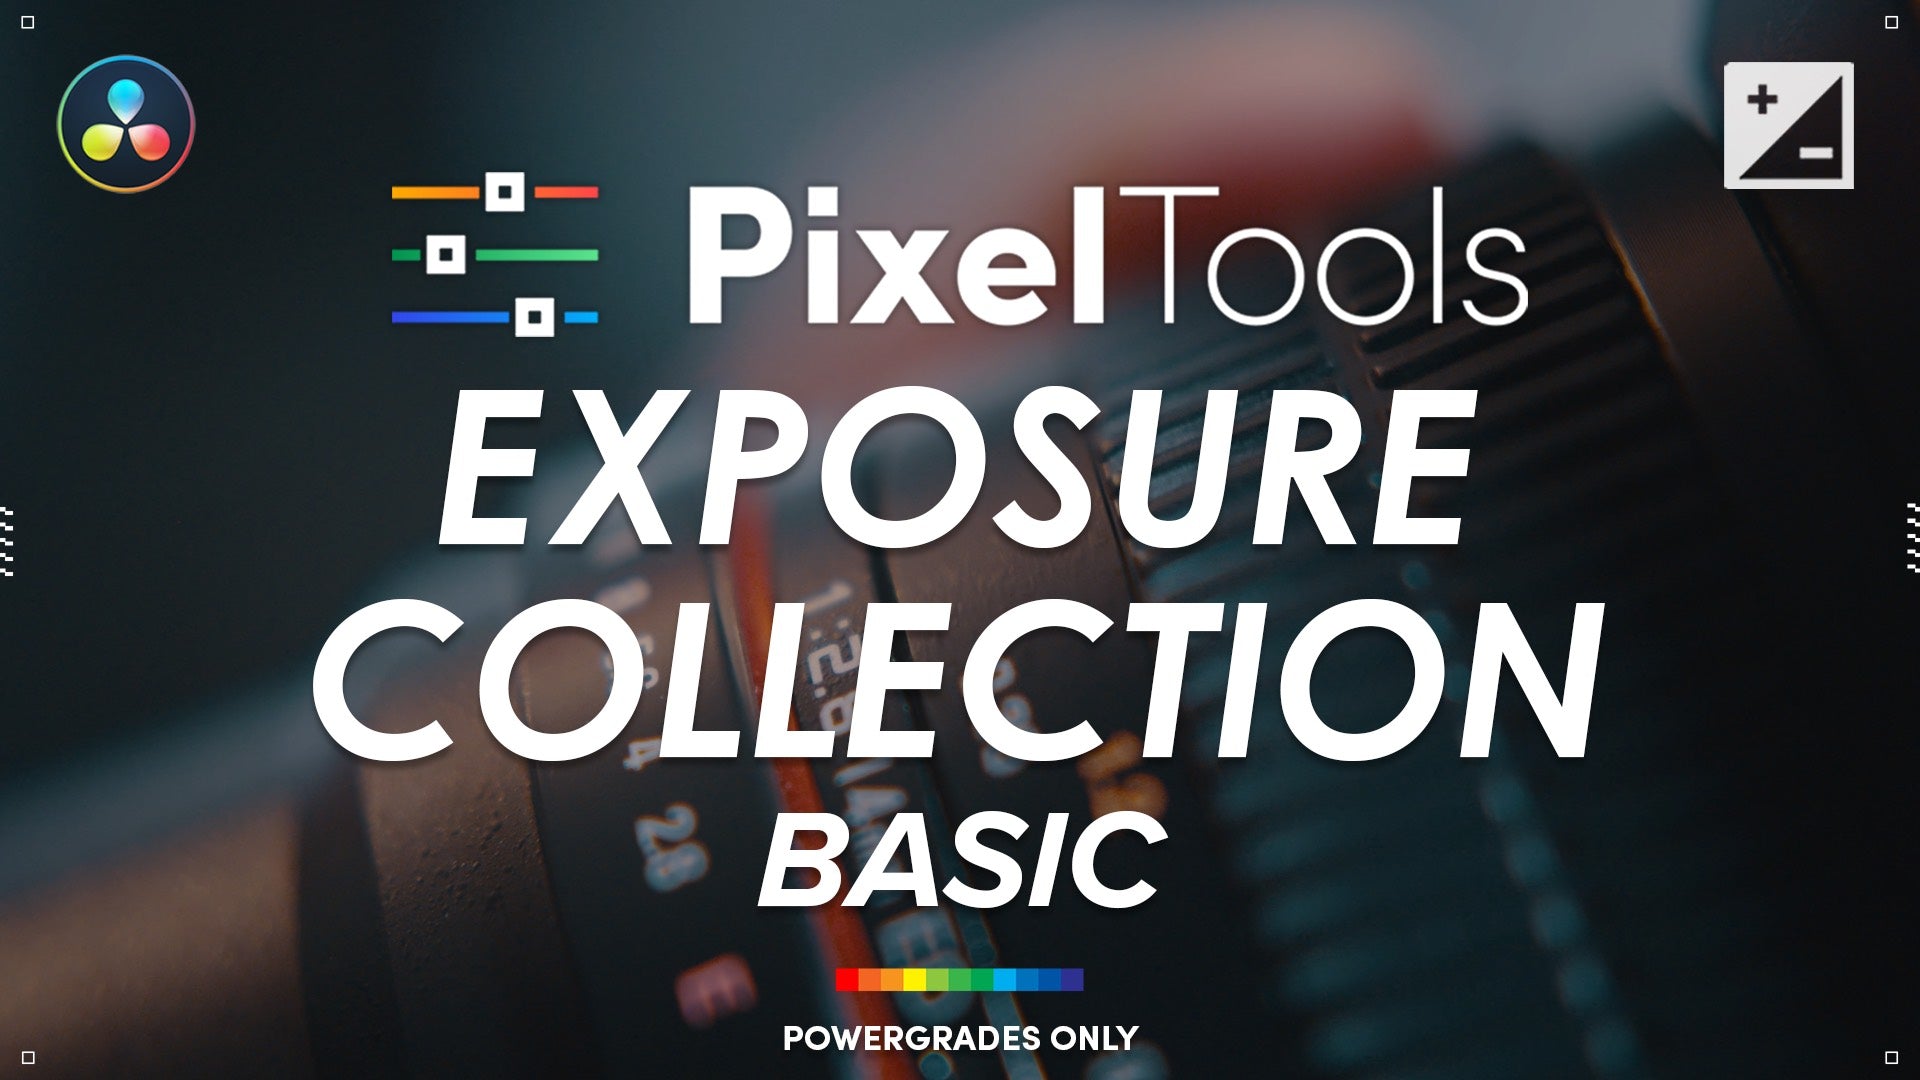 PixelTools Exposure Collection